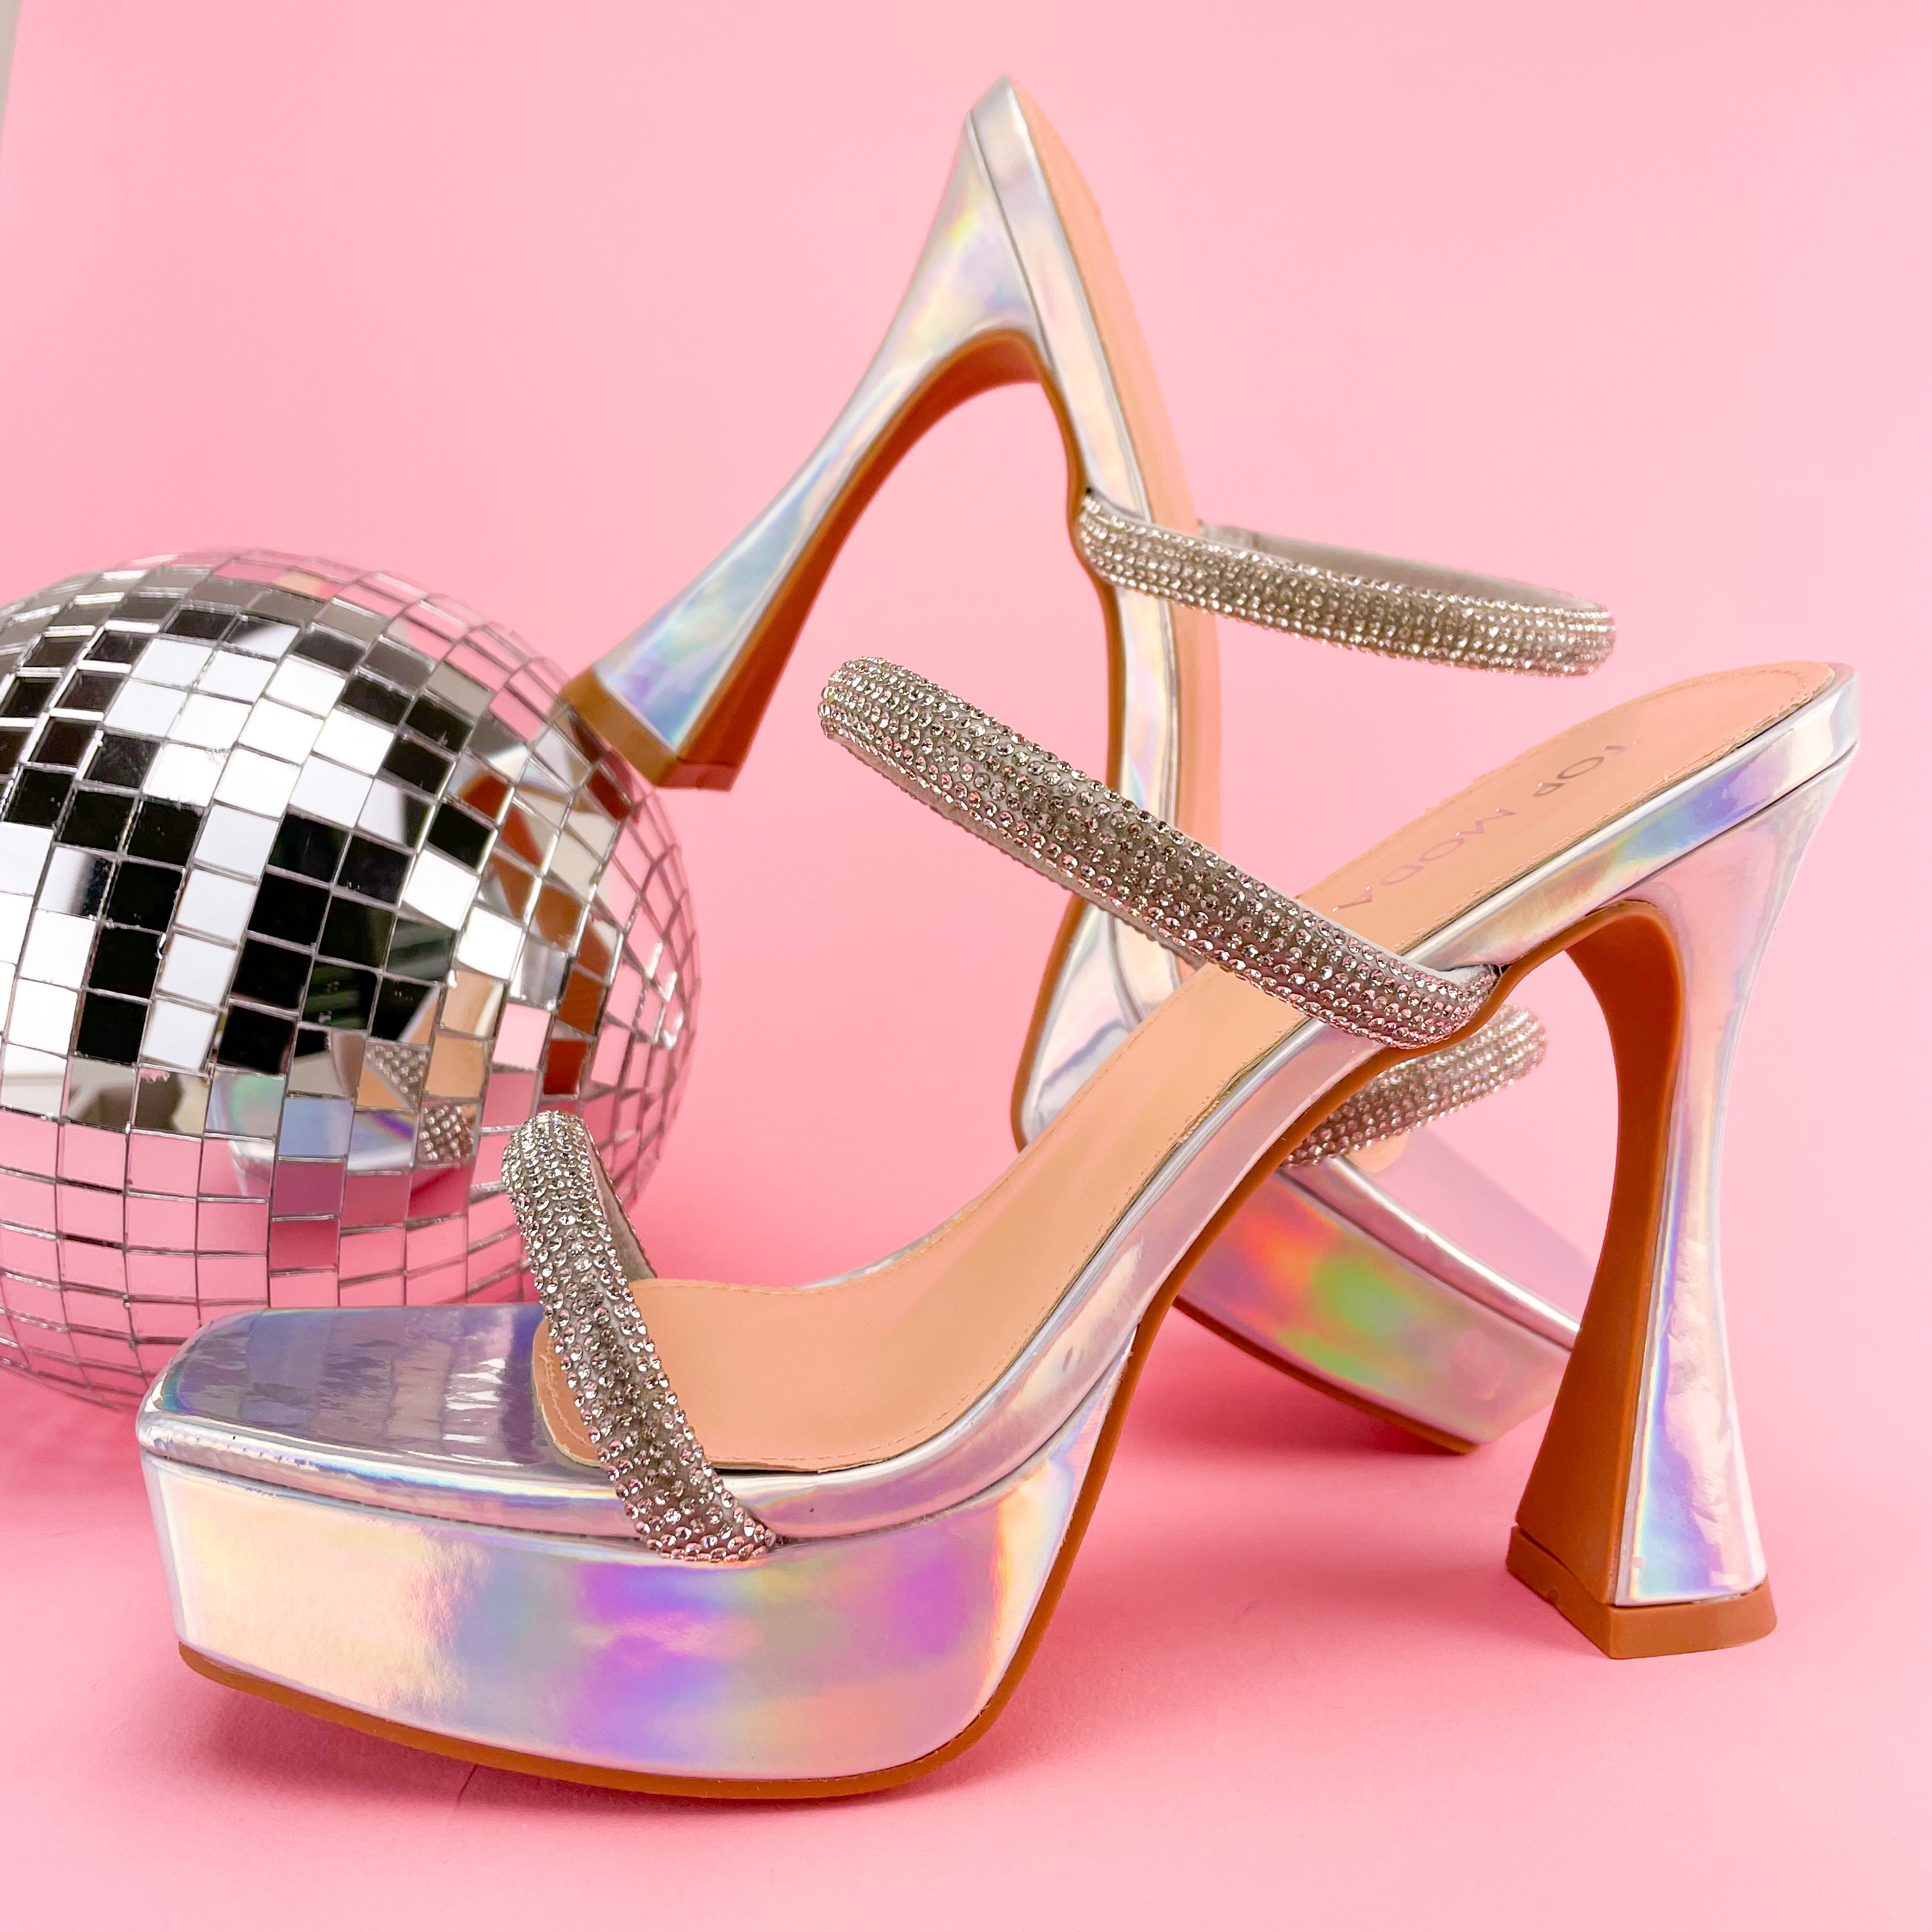 Top moda silver pat kanga-20 disco flare heels with rhinestone straps